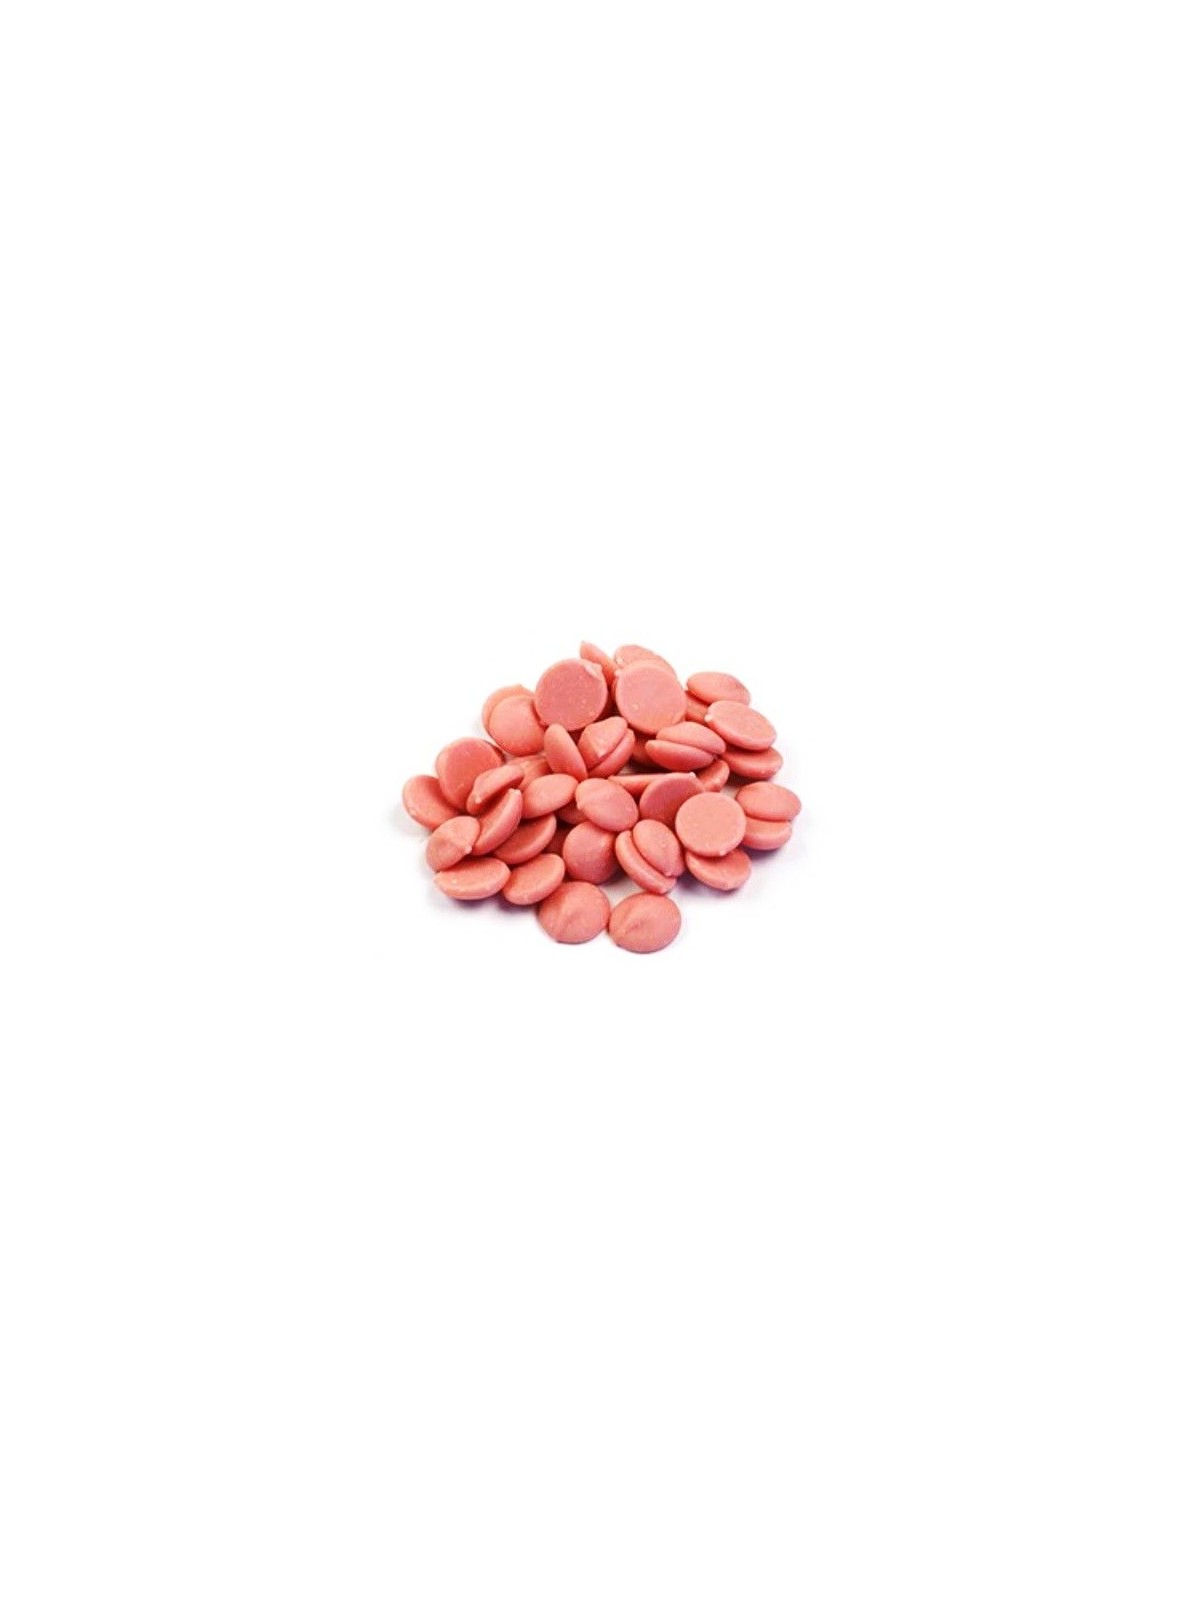 Yogurt-strawberry couverture  - seeds - 500g